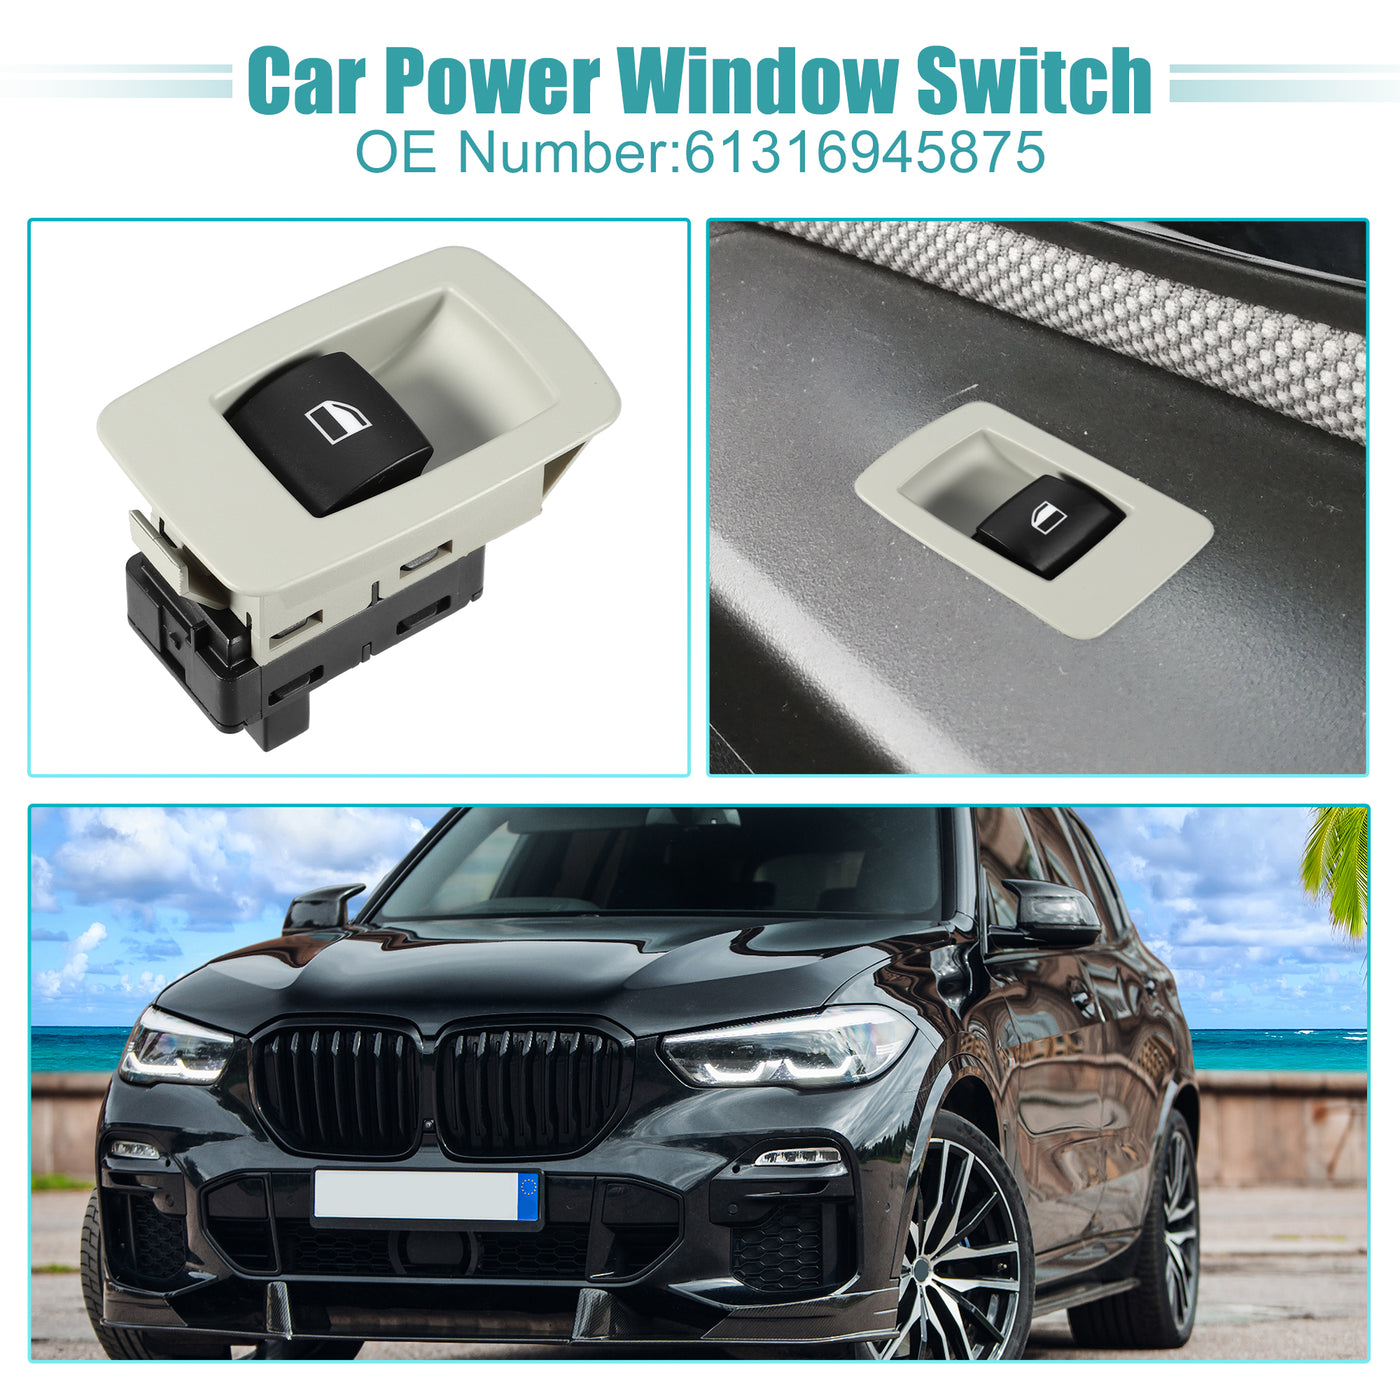 ACROPIX Power Window Switch Window Control Switch Fit for BMW 325i 2006 No.61316945875 - Pack of 1